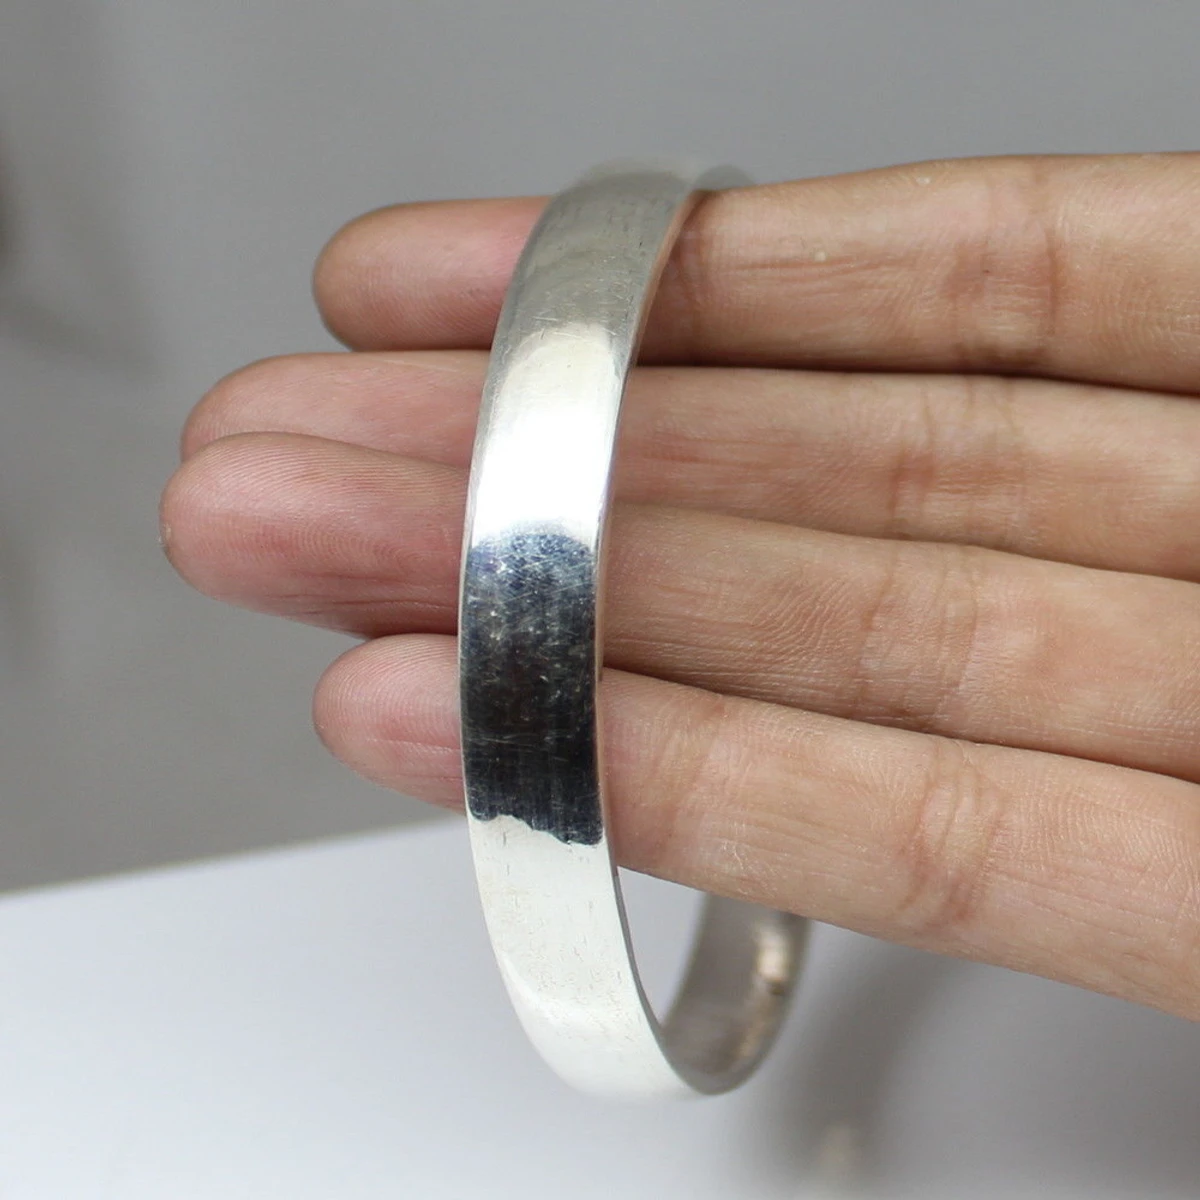 Silver Stainless Steel Cuff Bangles Bracelets for Men & Women